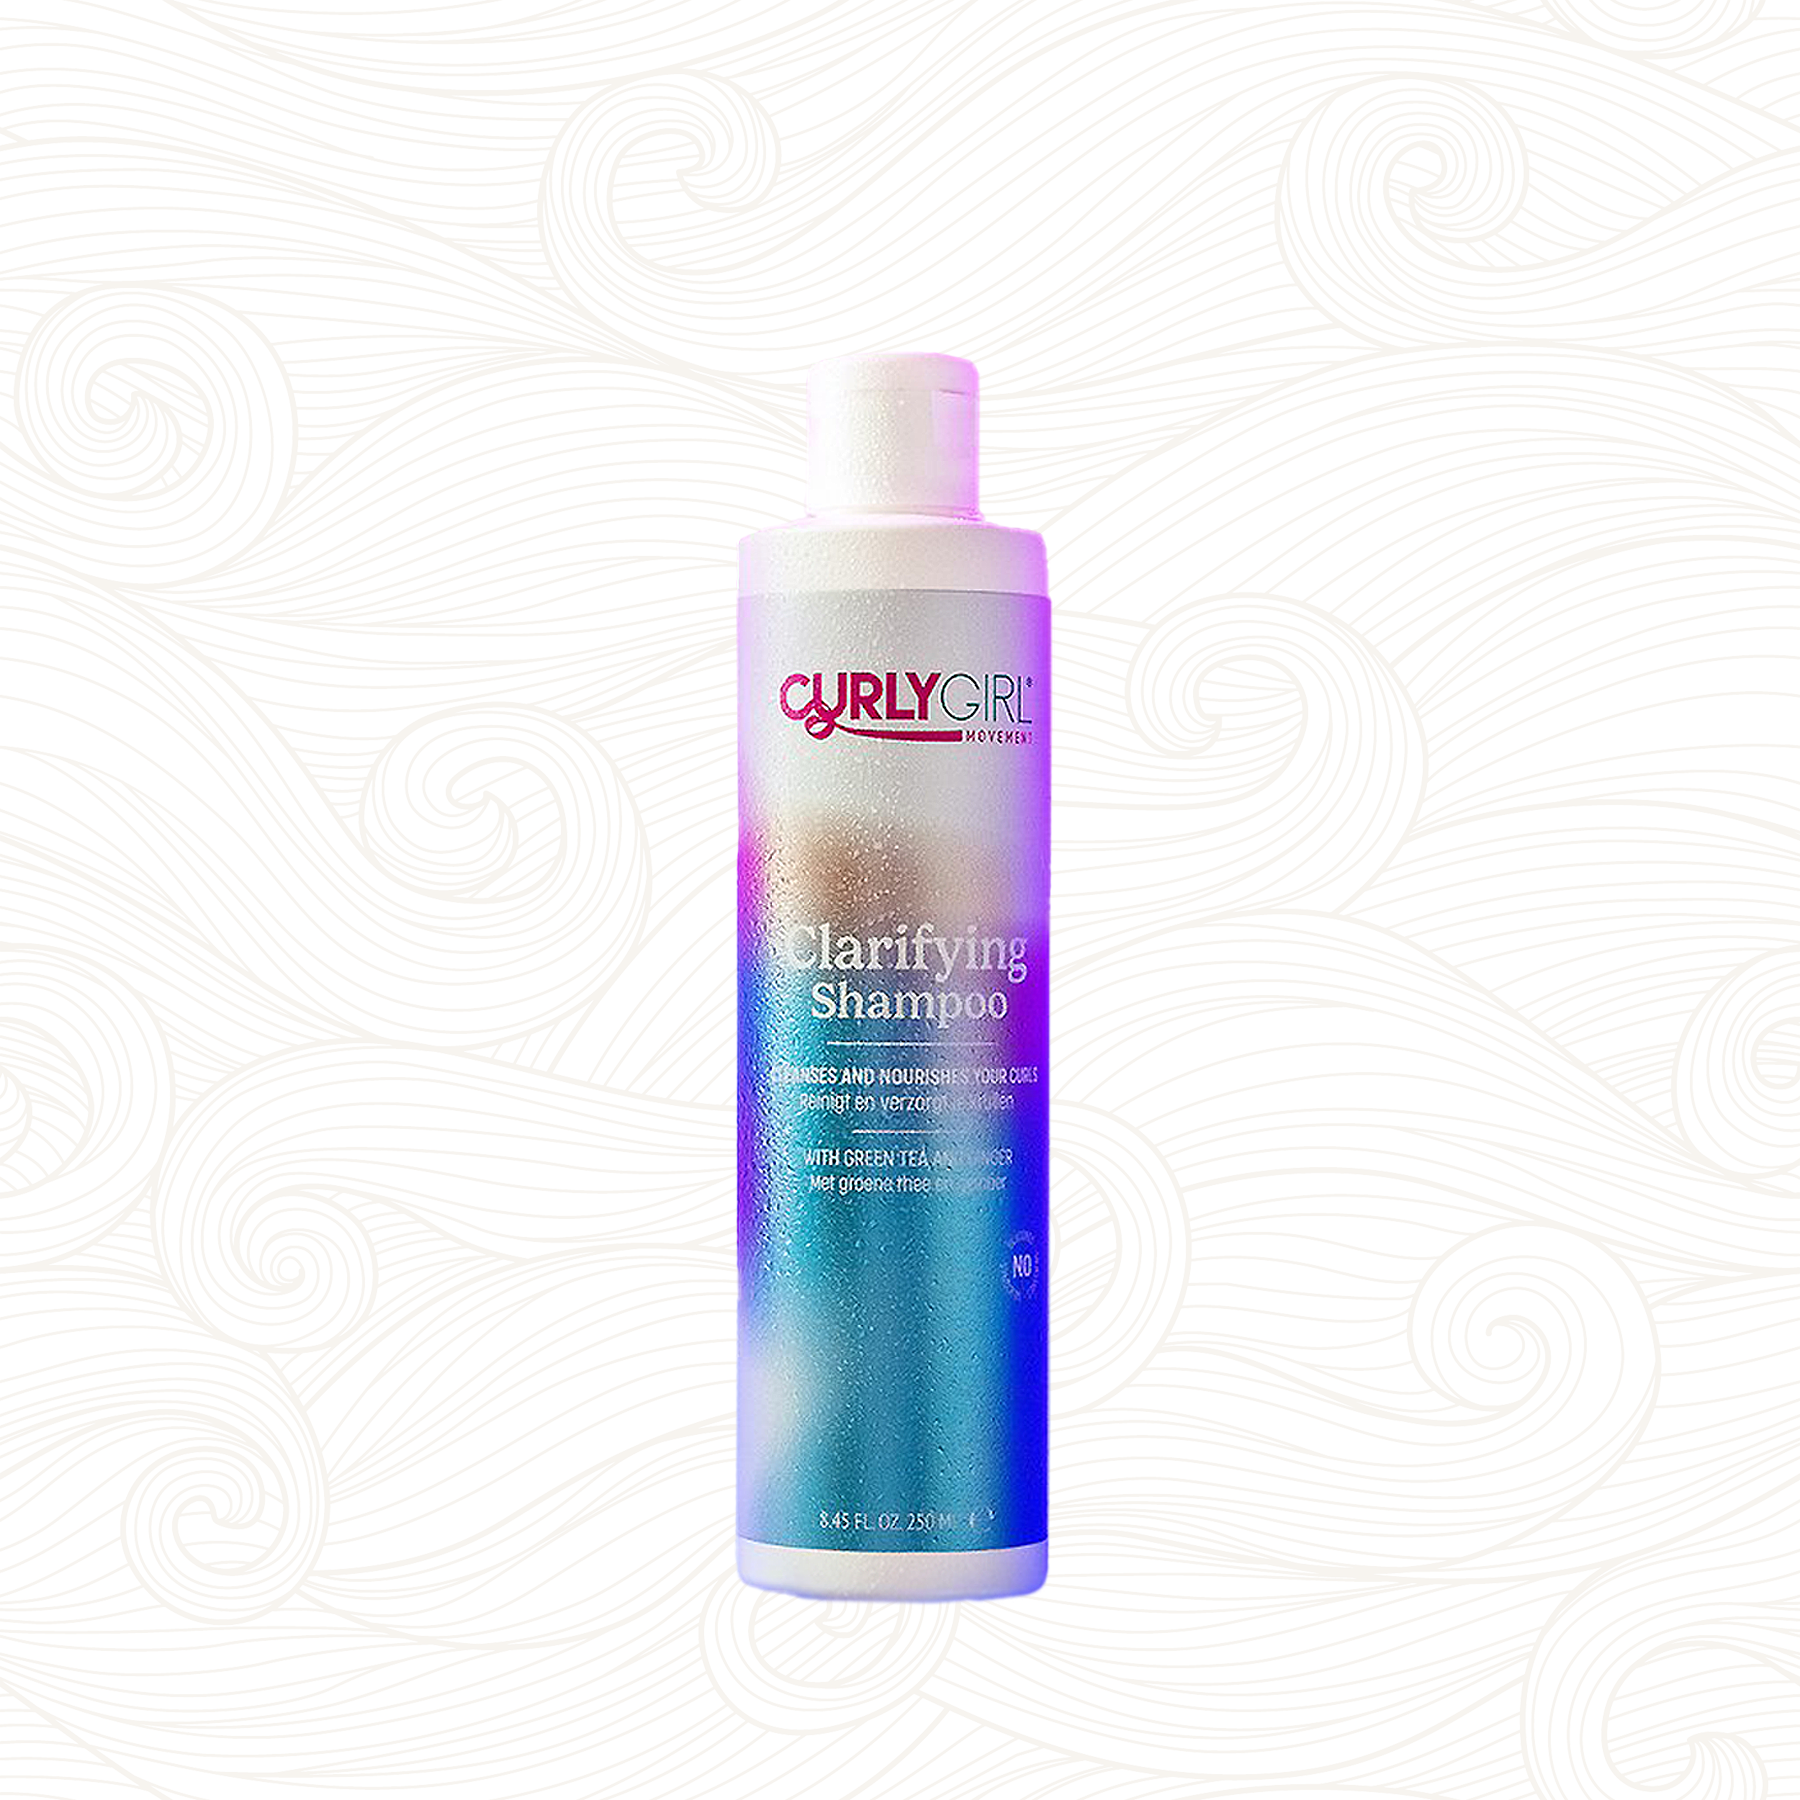 Curlygirl Movement | Clarifying Shampoo /250ml Shampoo Curlygirl Movement